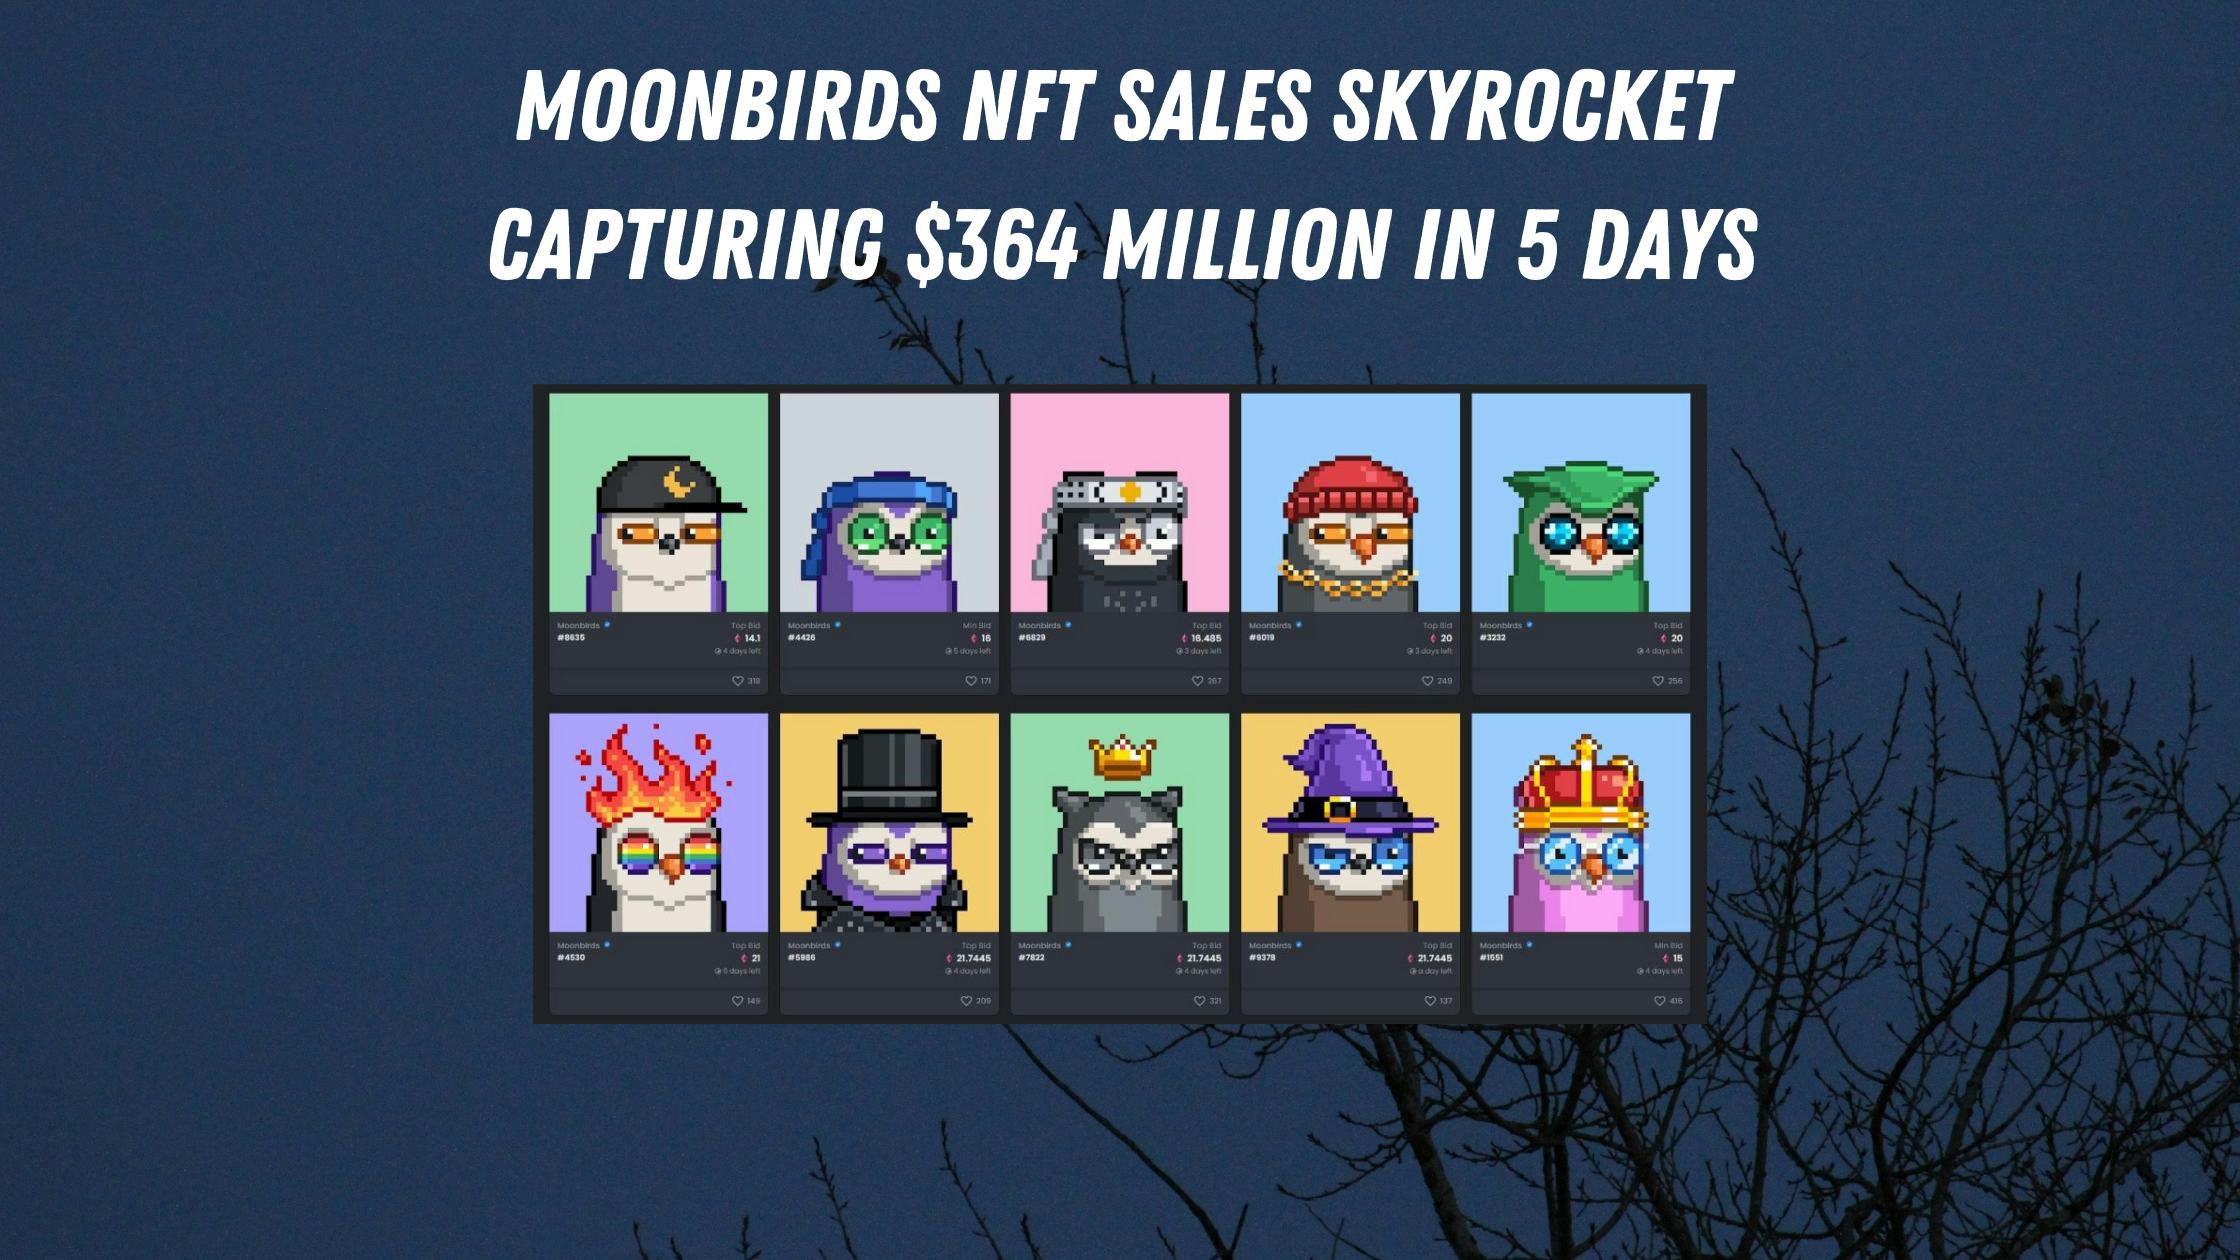 Moonbirds NFT Sales Skyrocket Capturing $364 Million in 5 Days